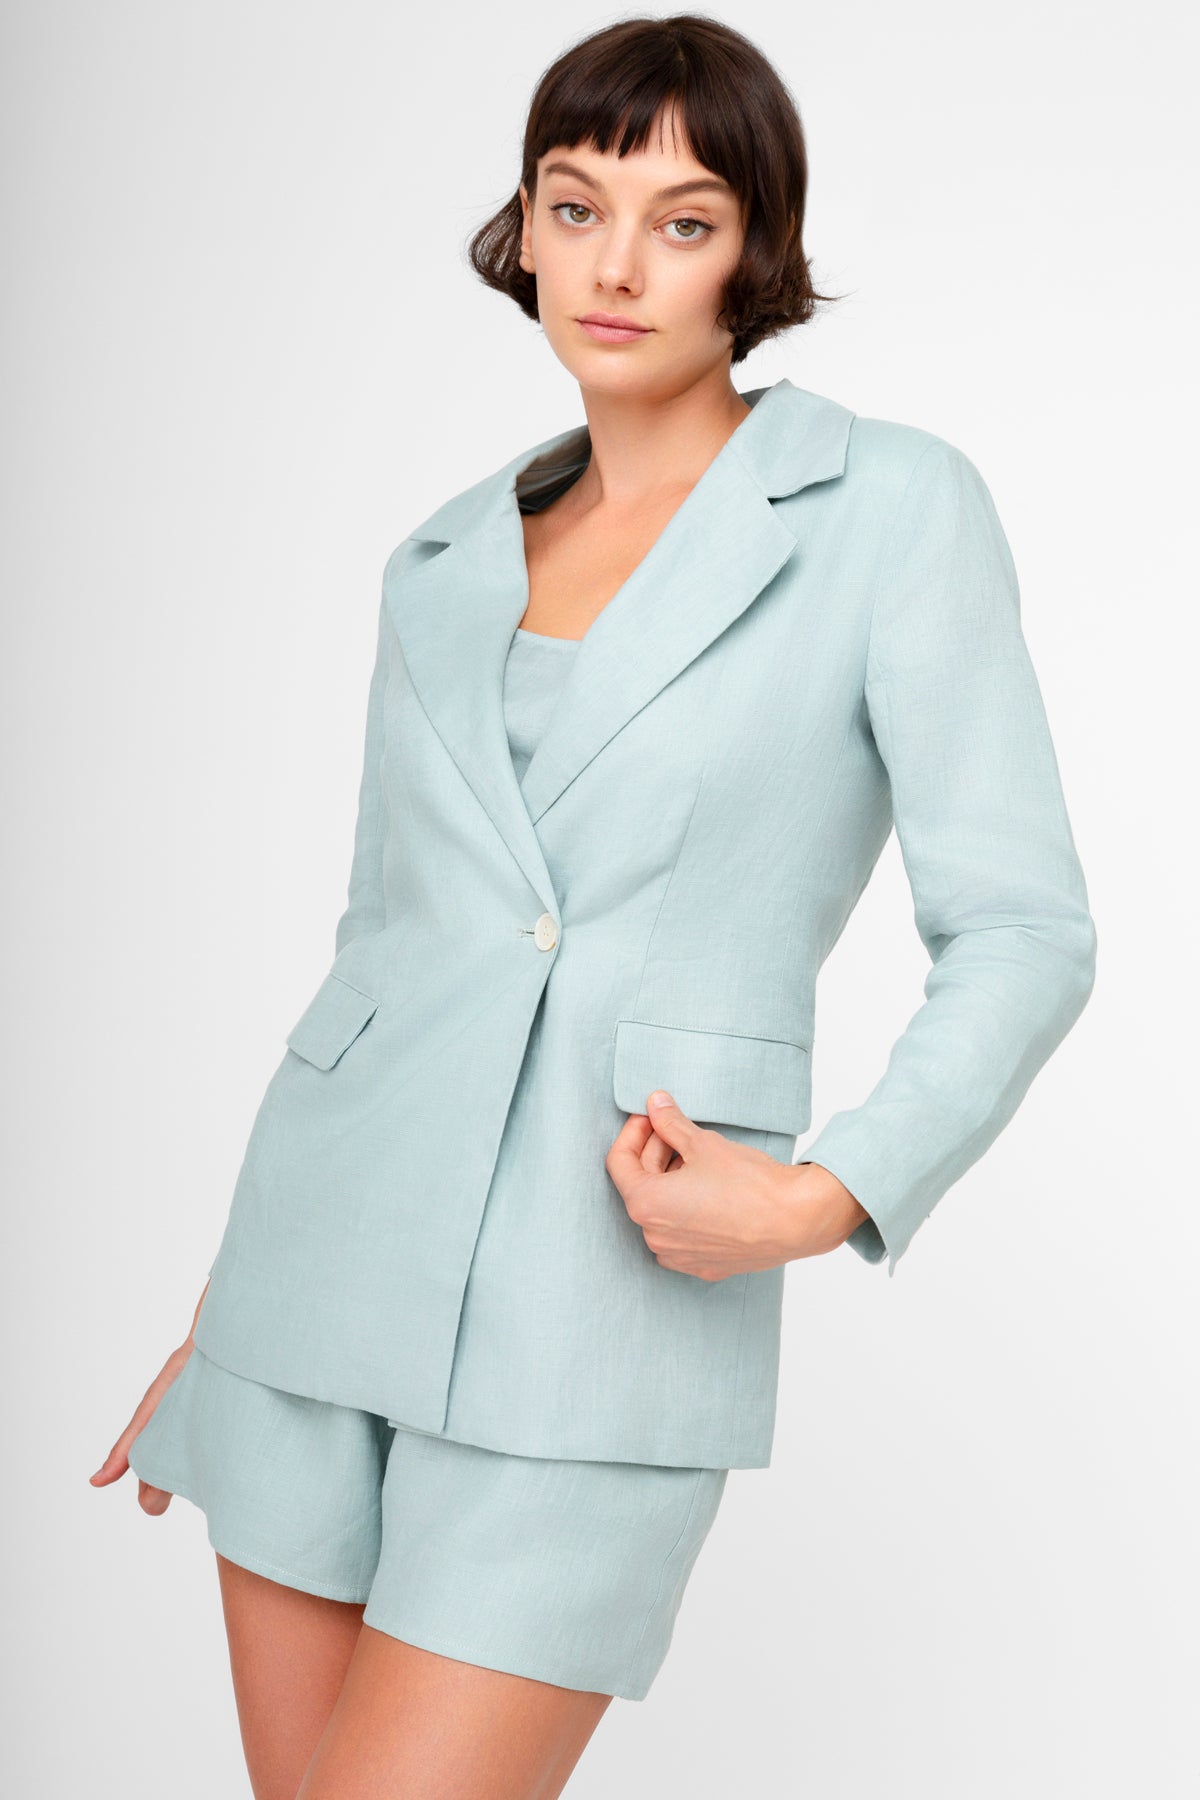 The Augusta Baby Blue Linen Blend Suit - Women's Custom Suit